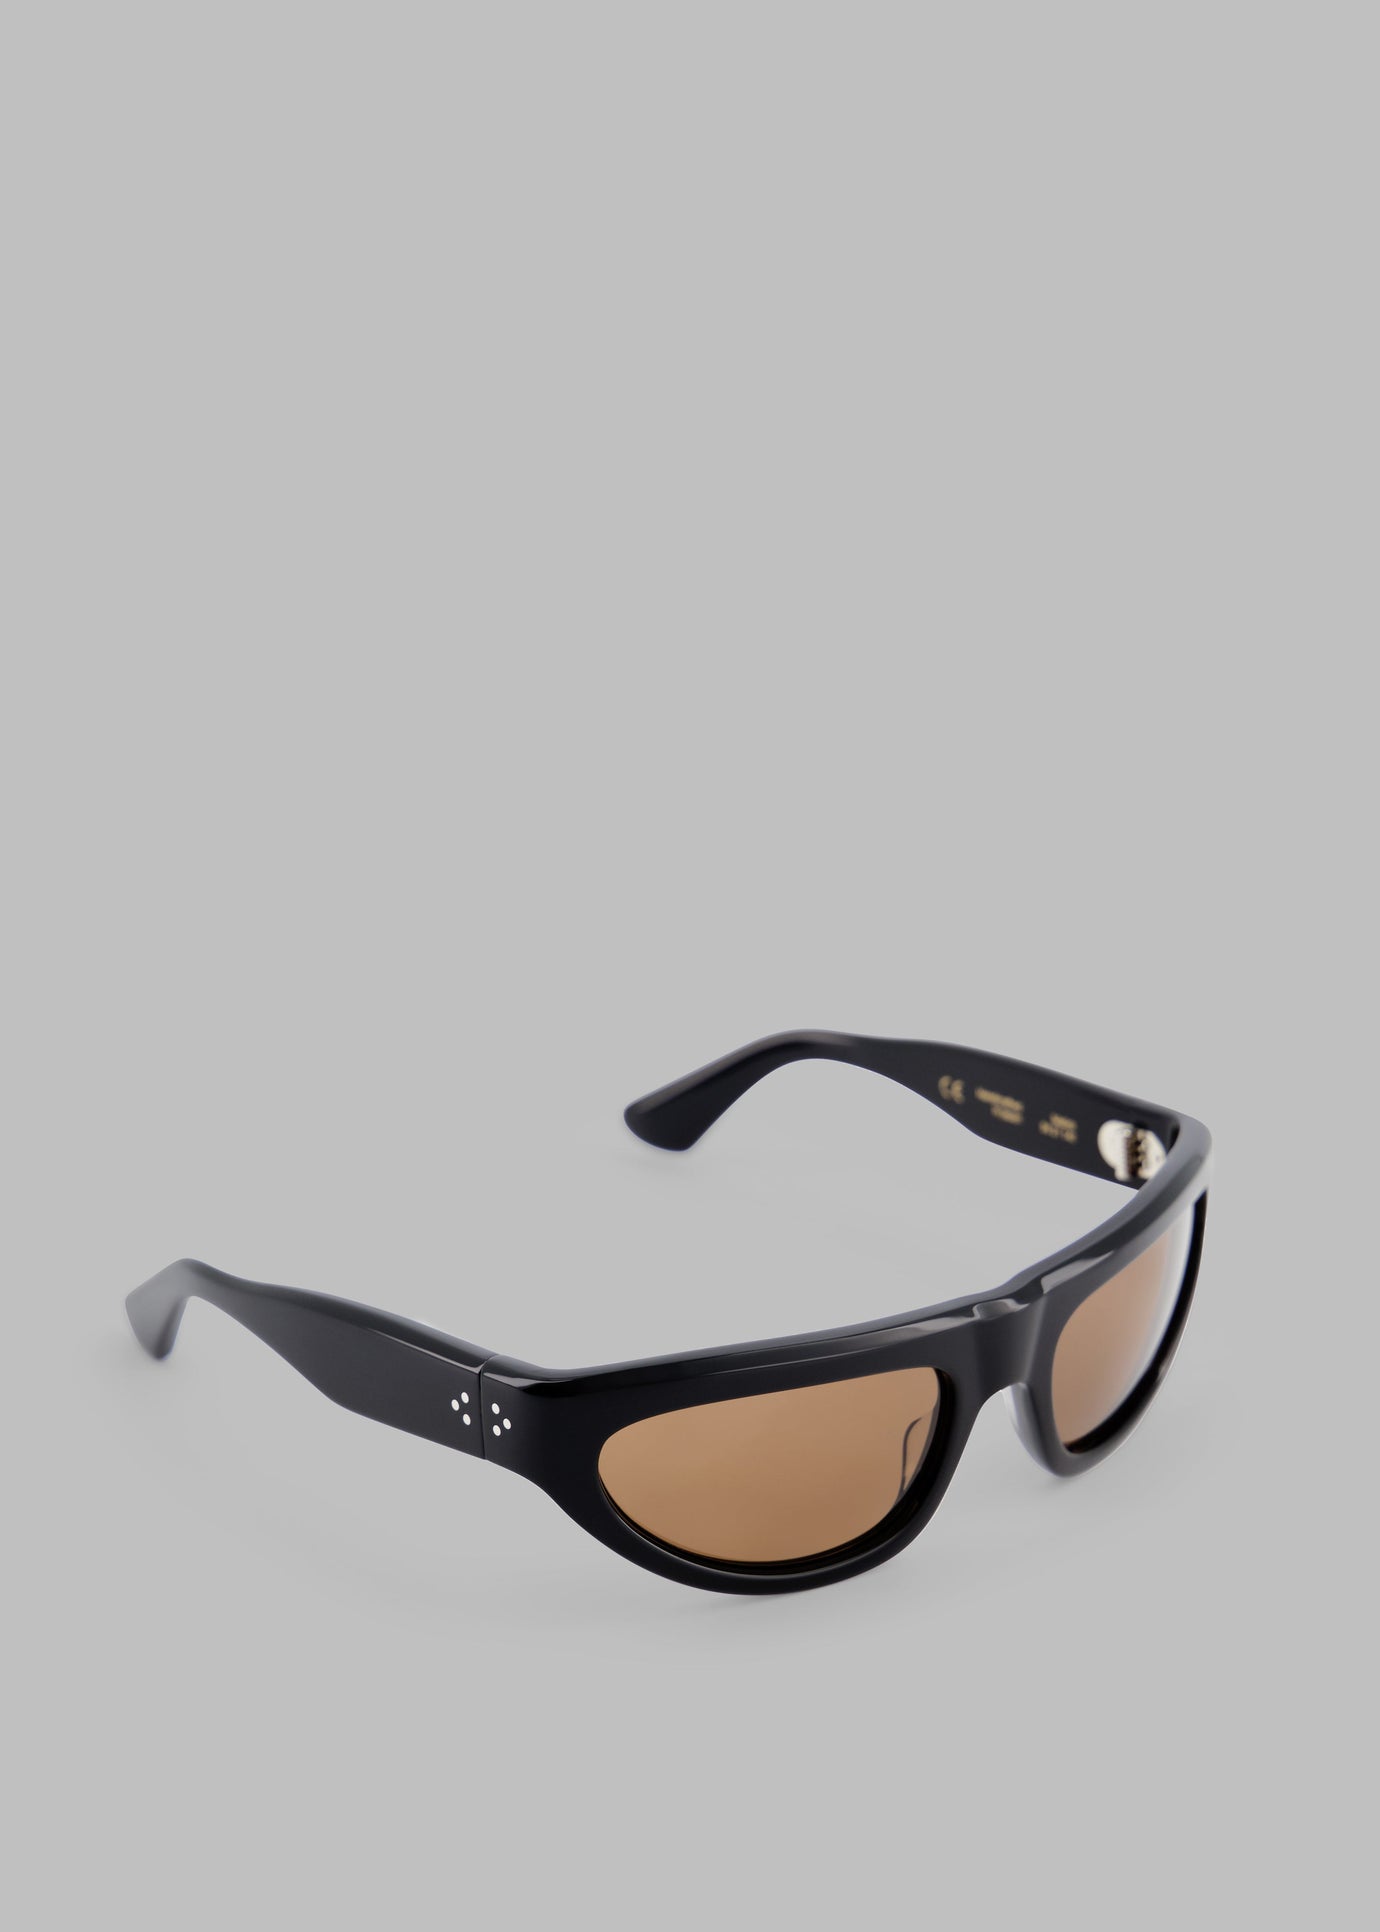 Port Tanger Malick Sunglasses - Black Acetate/Tobacco Lens - 1